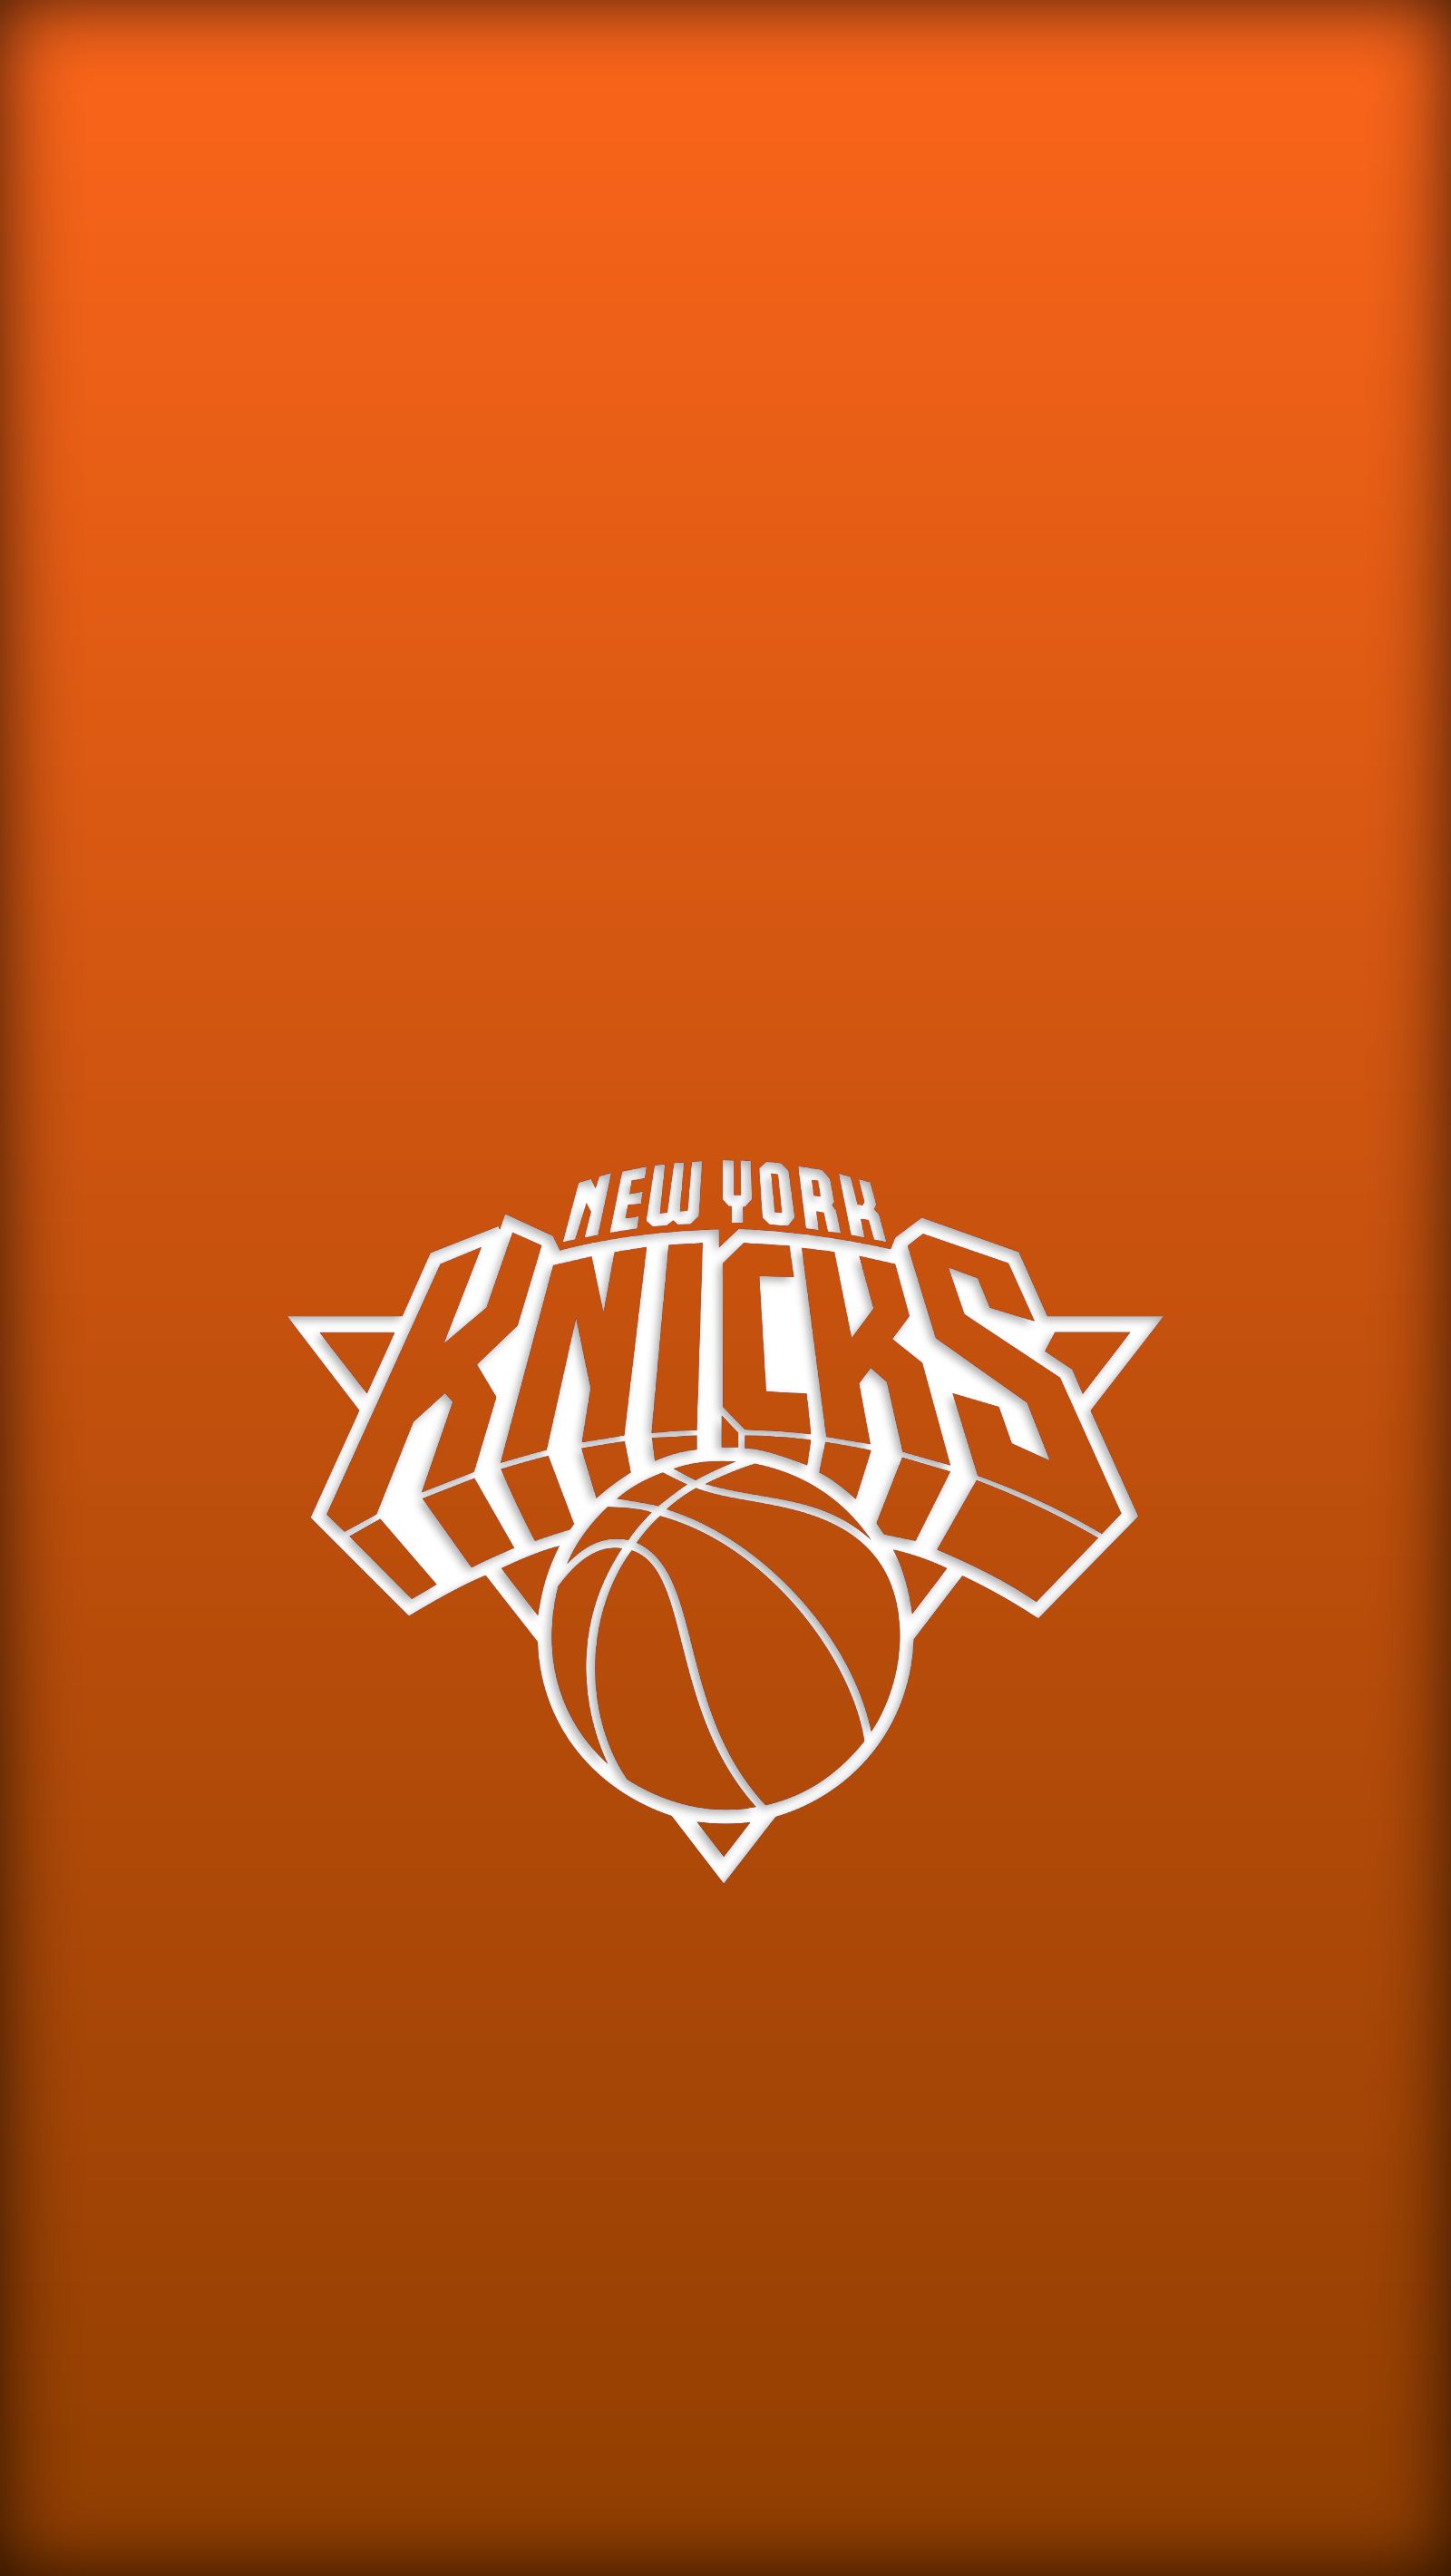 sportsign Shop. Redbubble. Knicks basketball, New york knicks logo, New york knicks